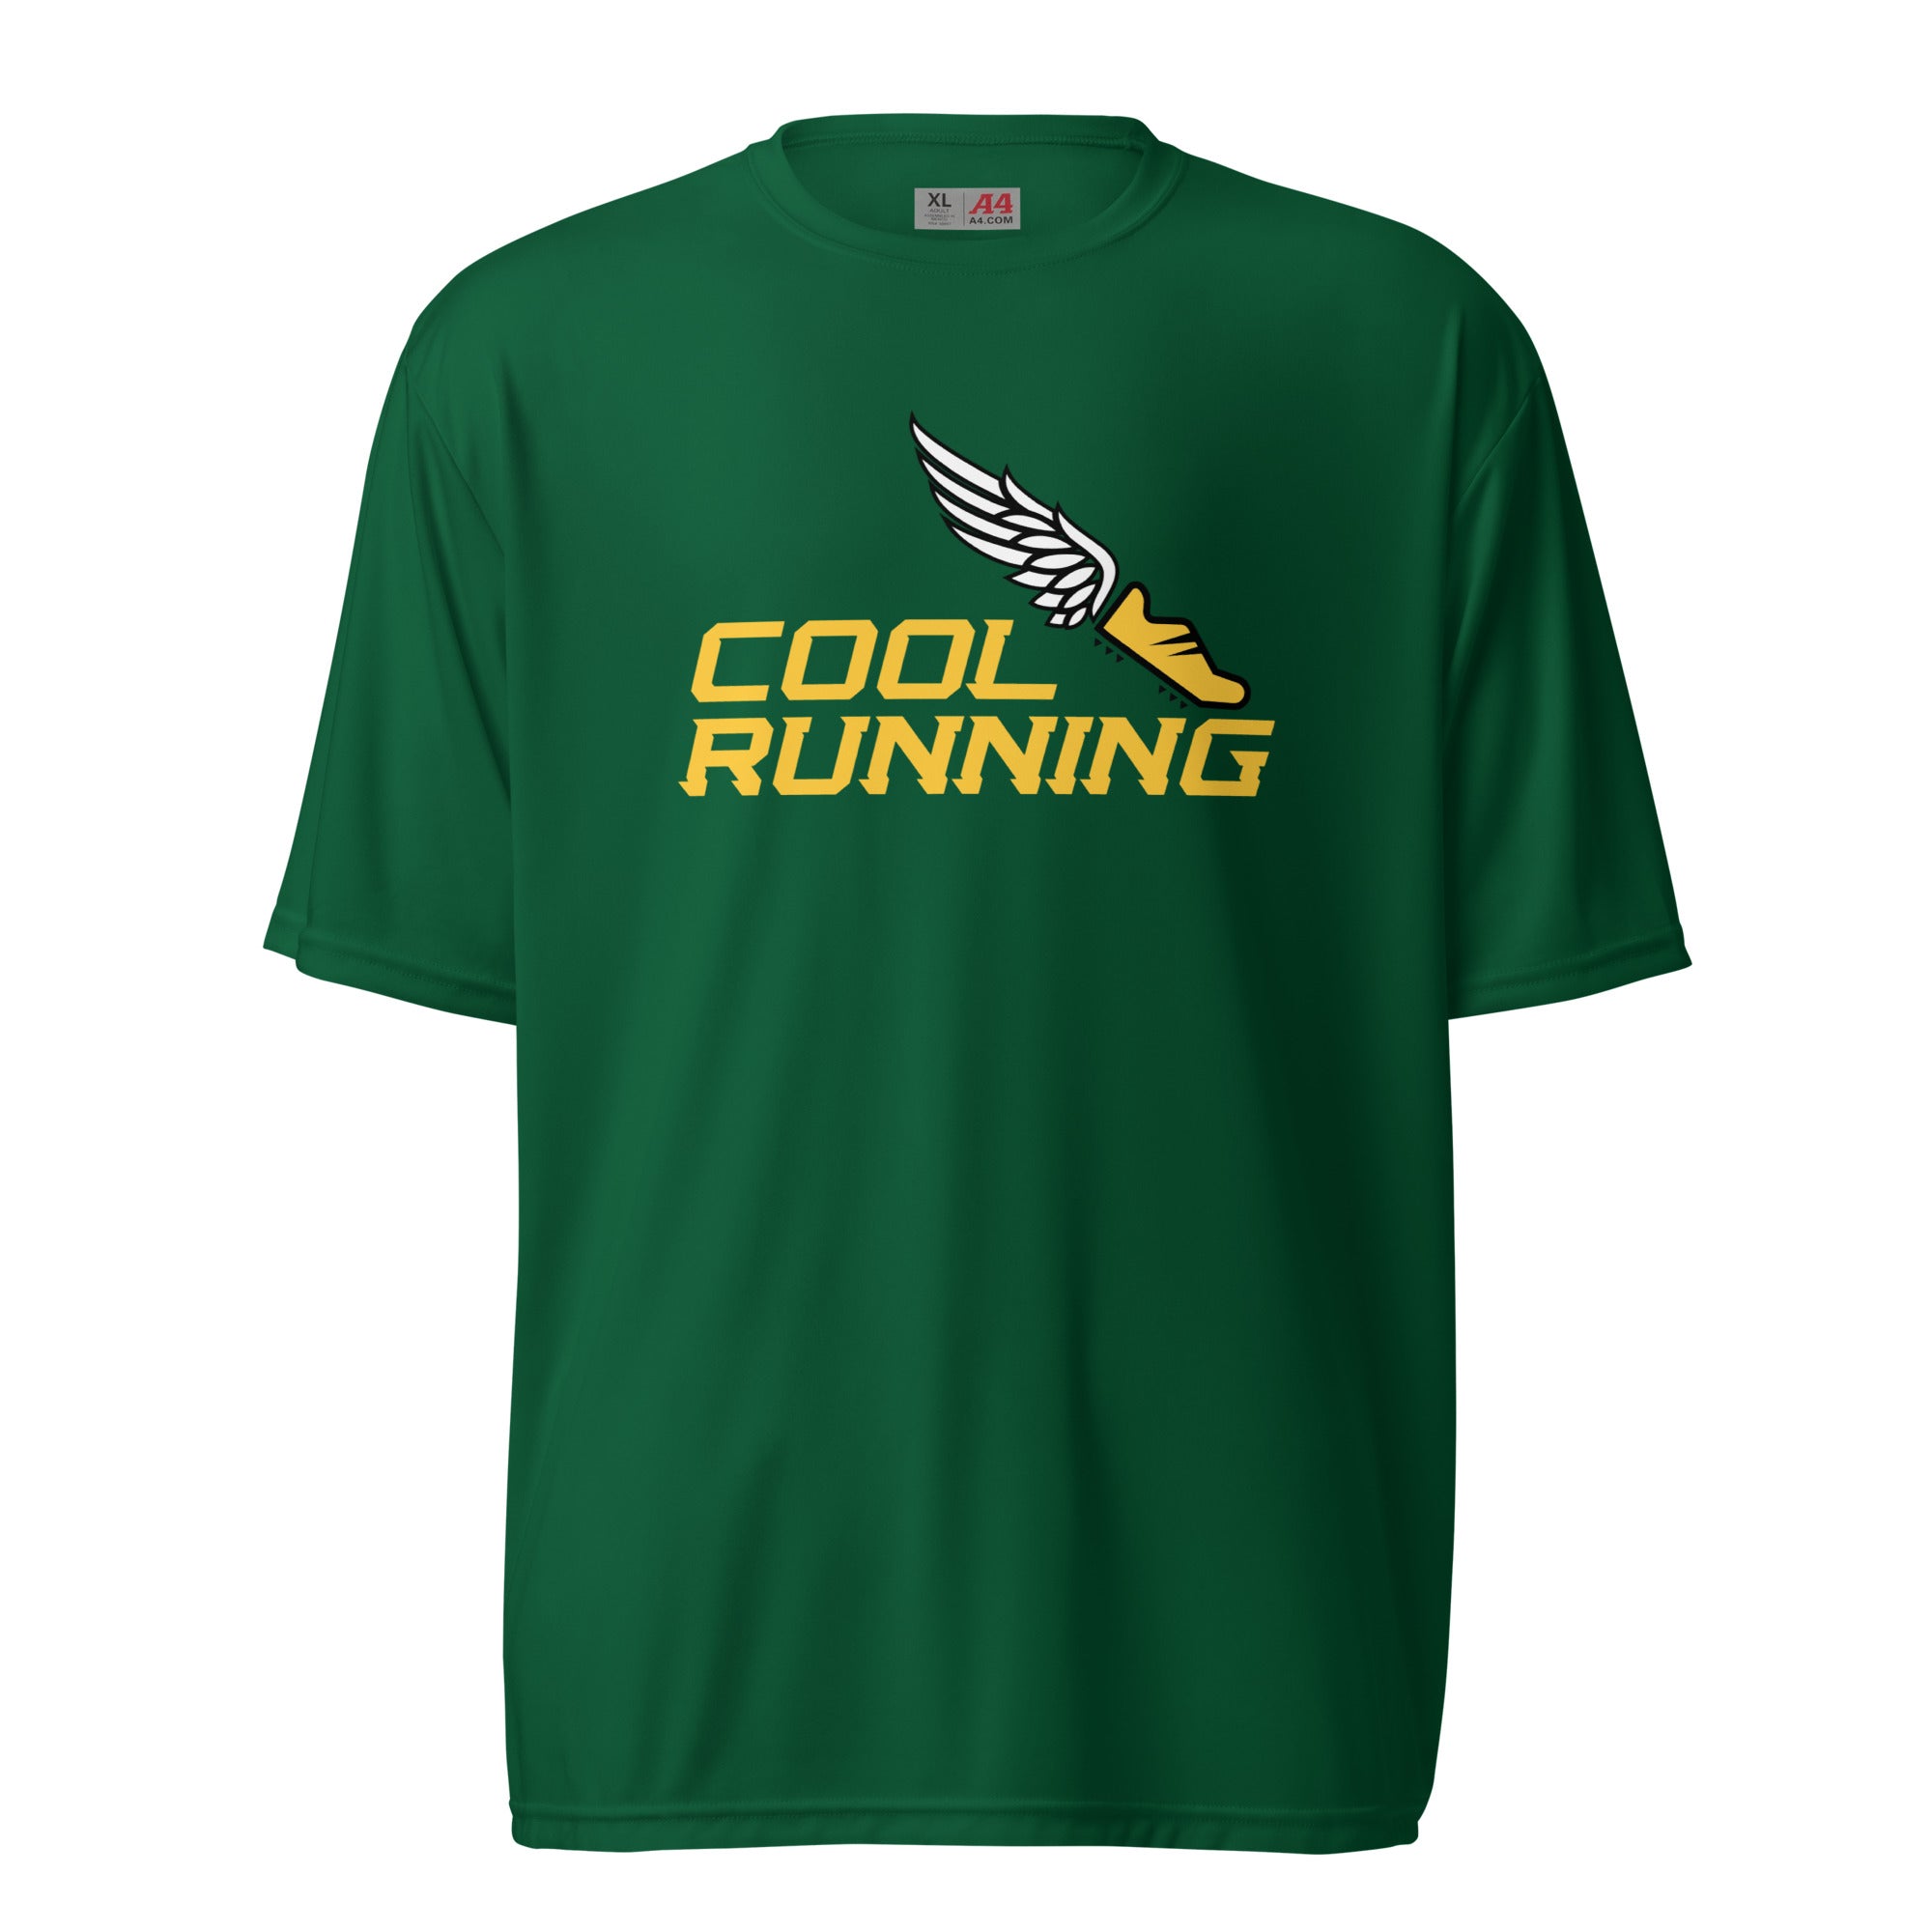 Cool Running Unisex performance crew neck t-shirt